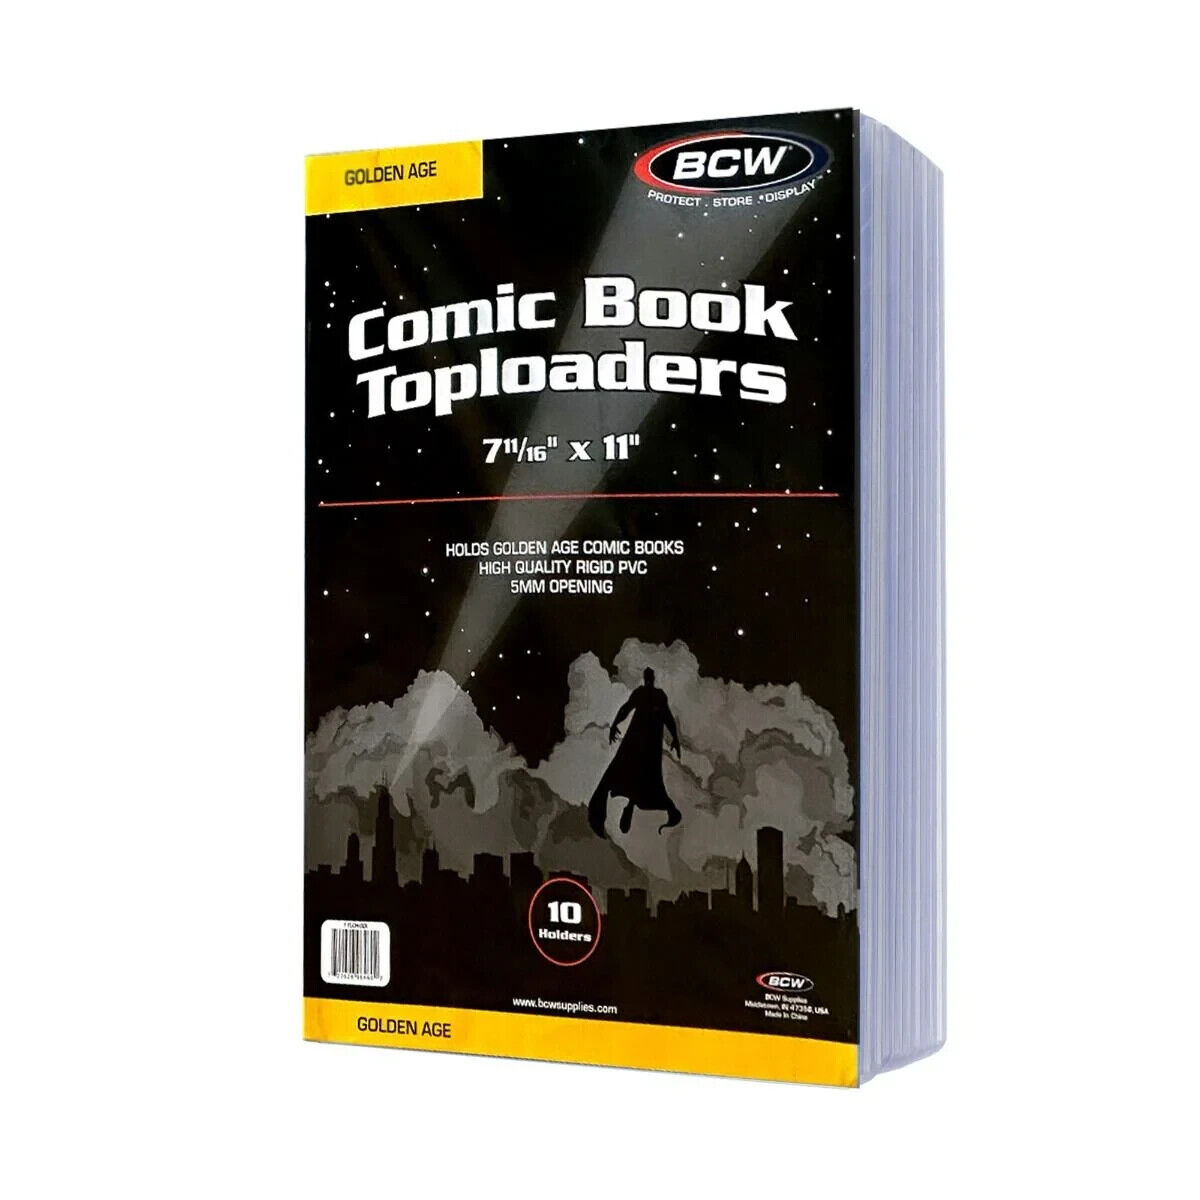 20 BCW Golden Age Comic Book Topload Holders Hard Plastic rigid protector sleeve